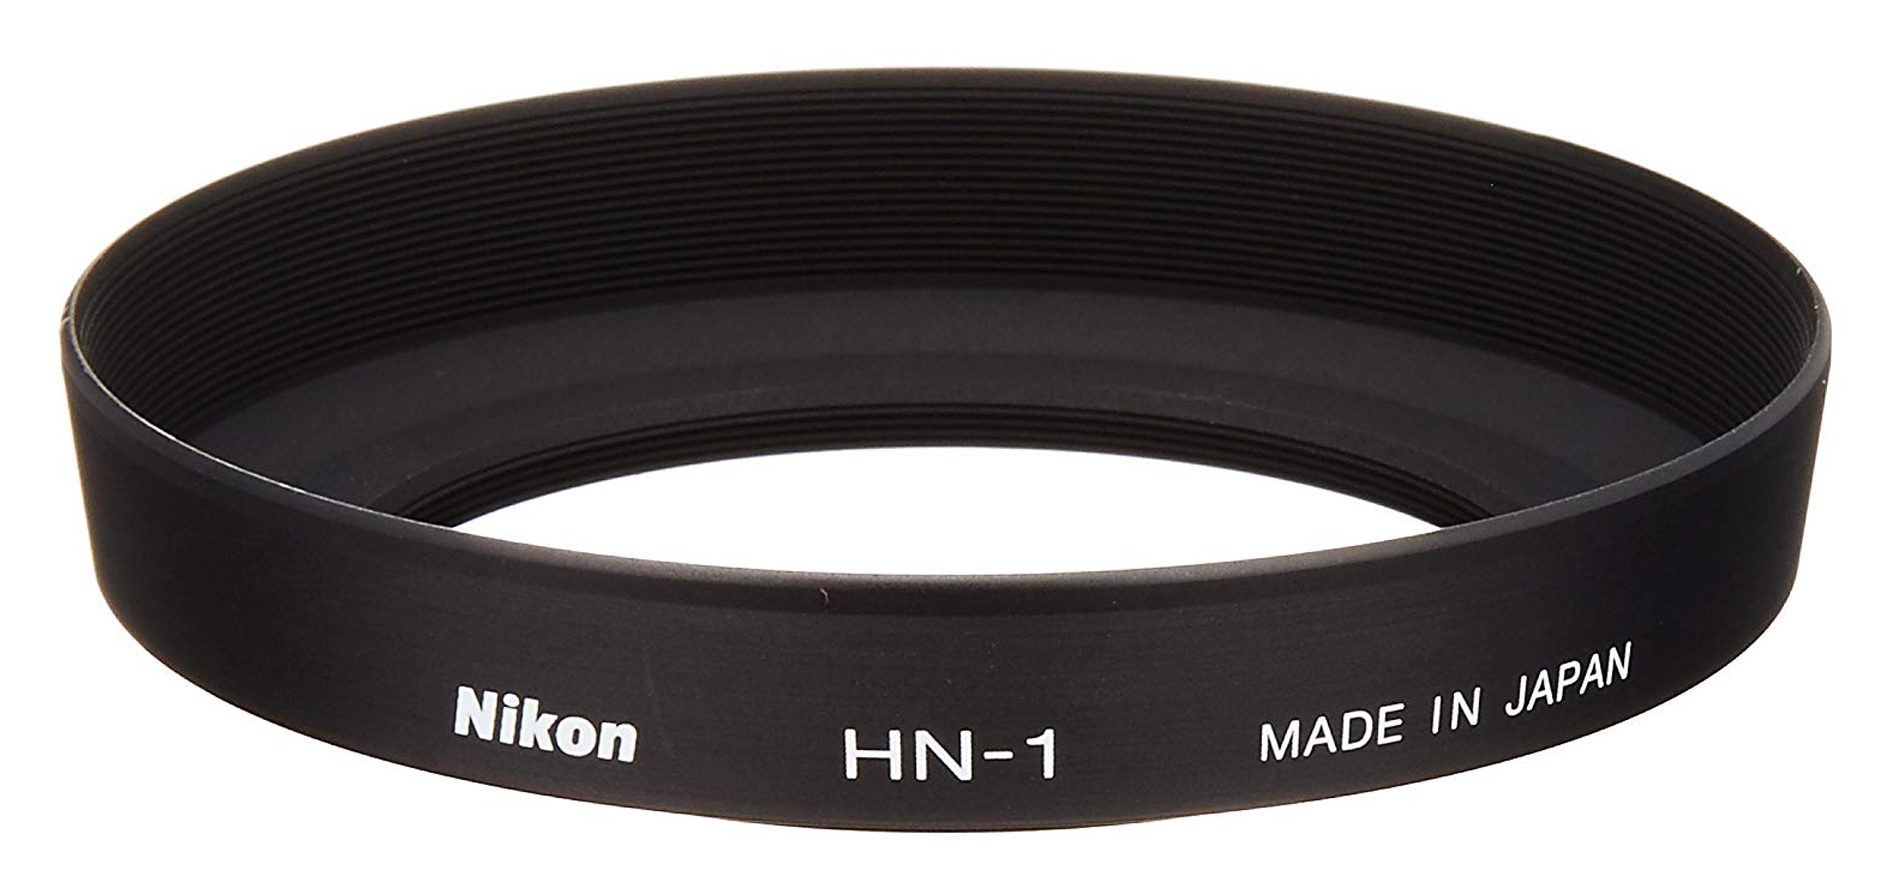 Nikon HN-1 52MM LENS HOOD 24/2.8,28/2,35/2.8PC